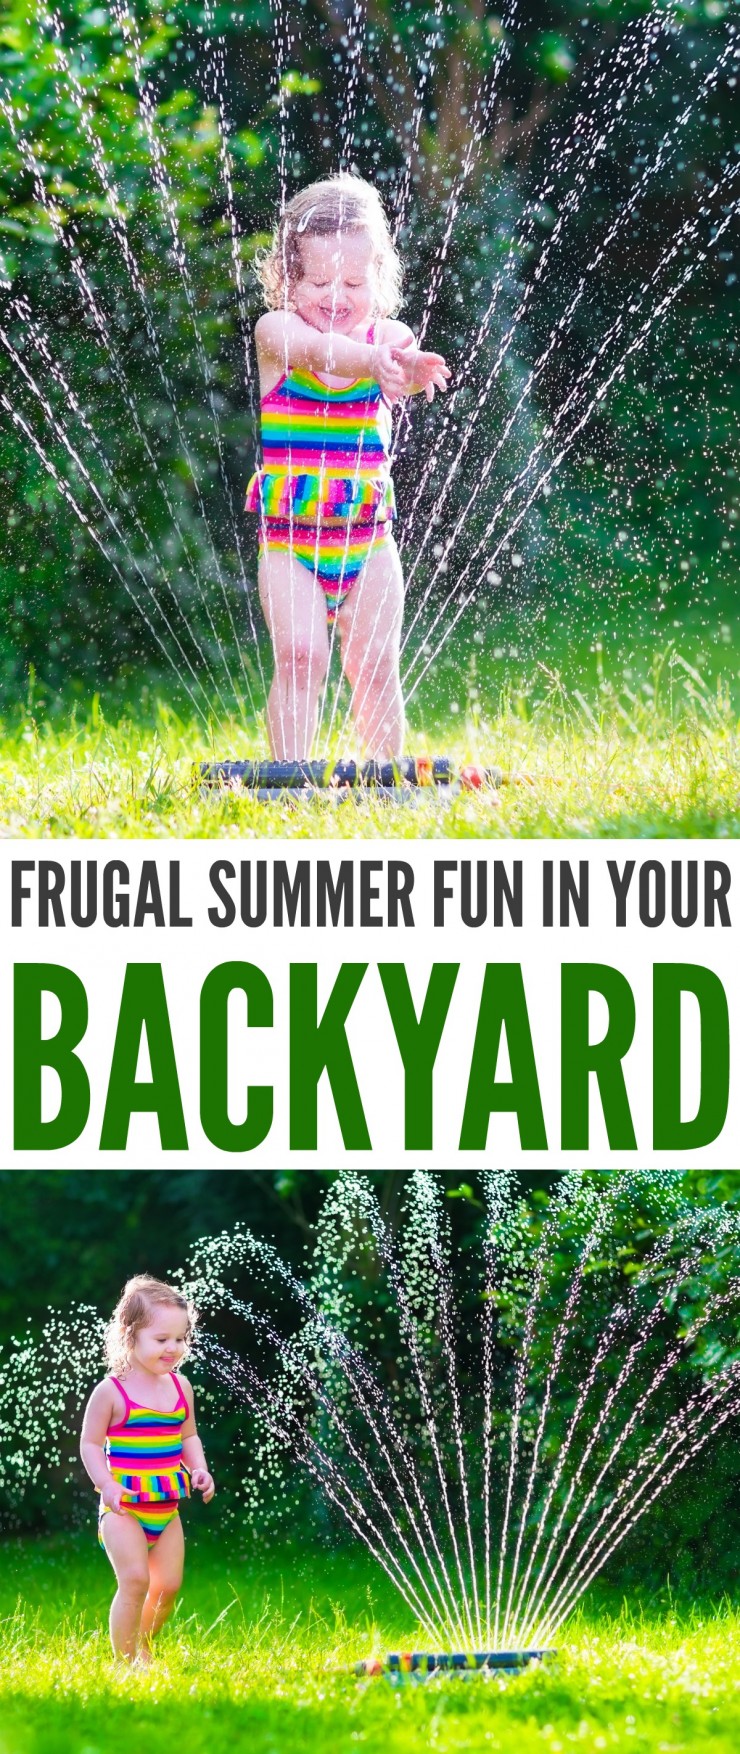 Frugal Summer Fun in Your Backyard